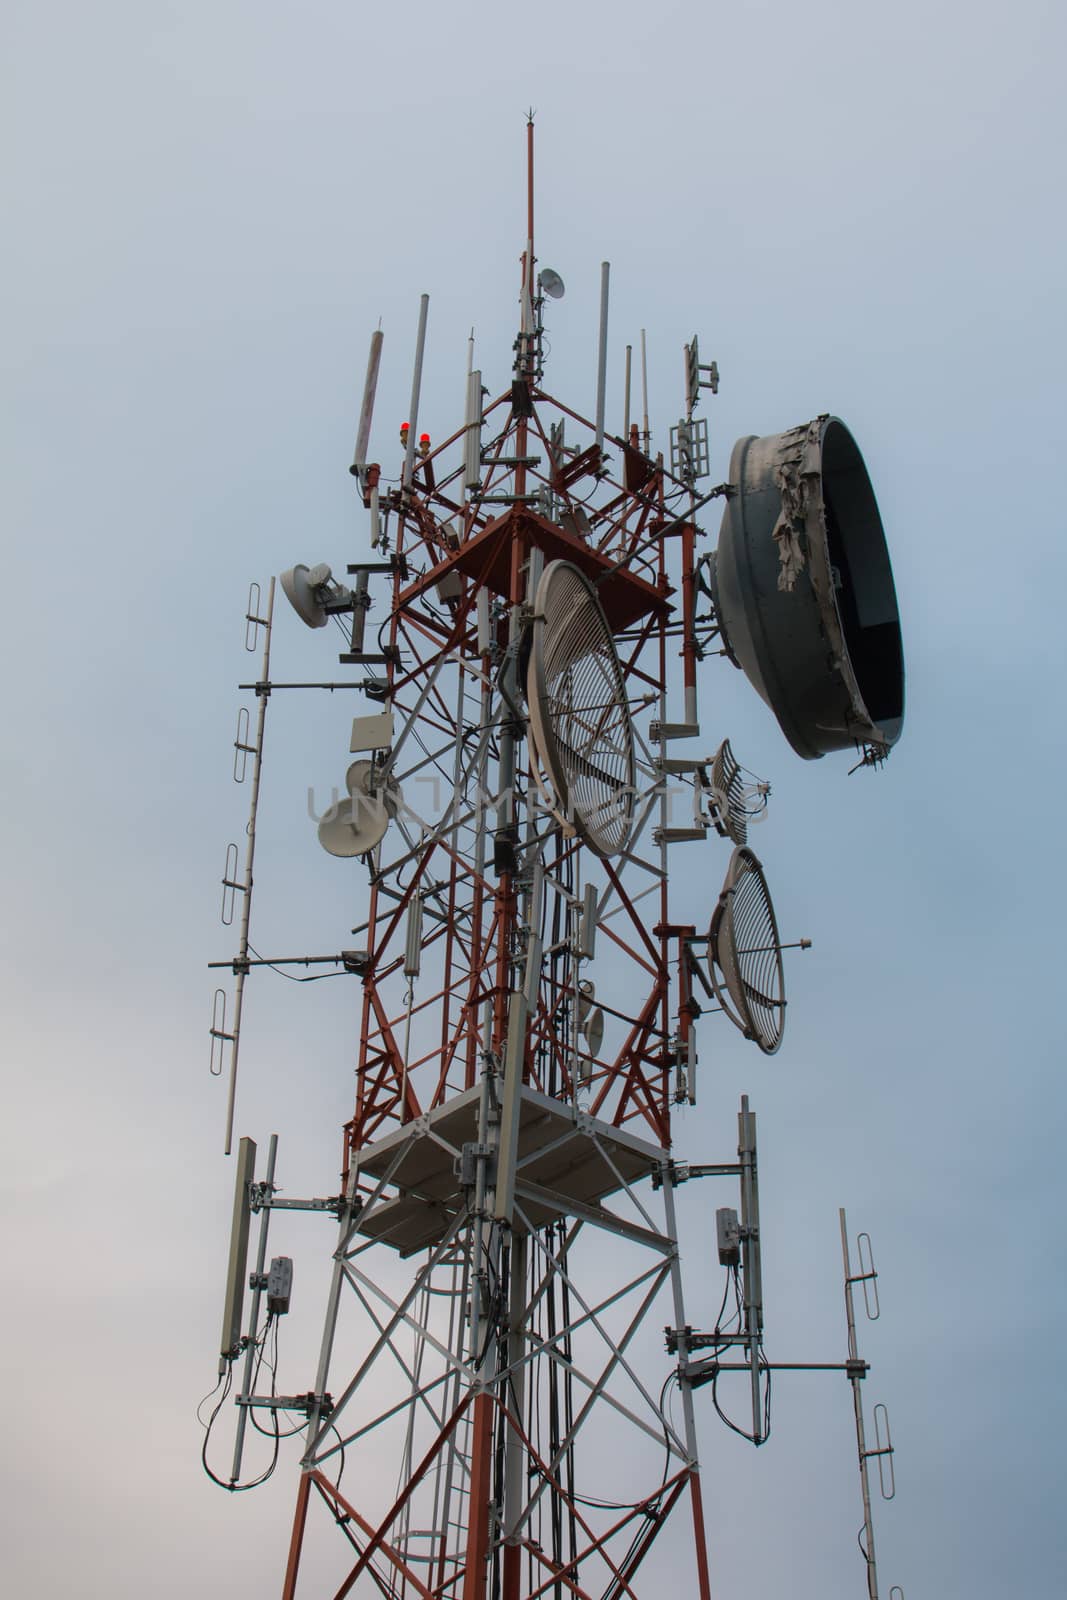 Telecommunication tower blue sky background,Phone antenna